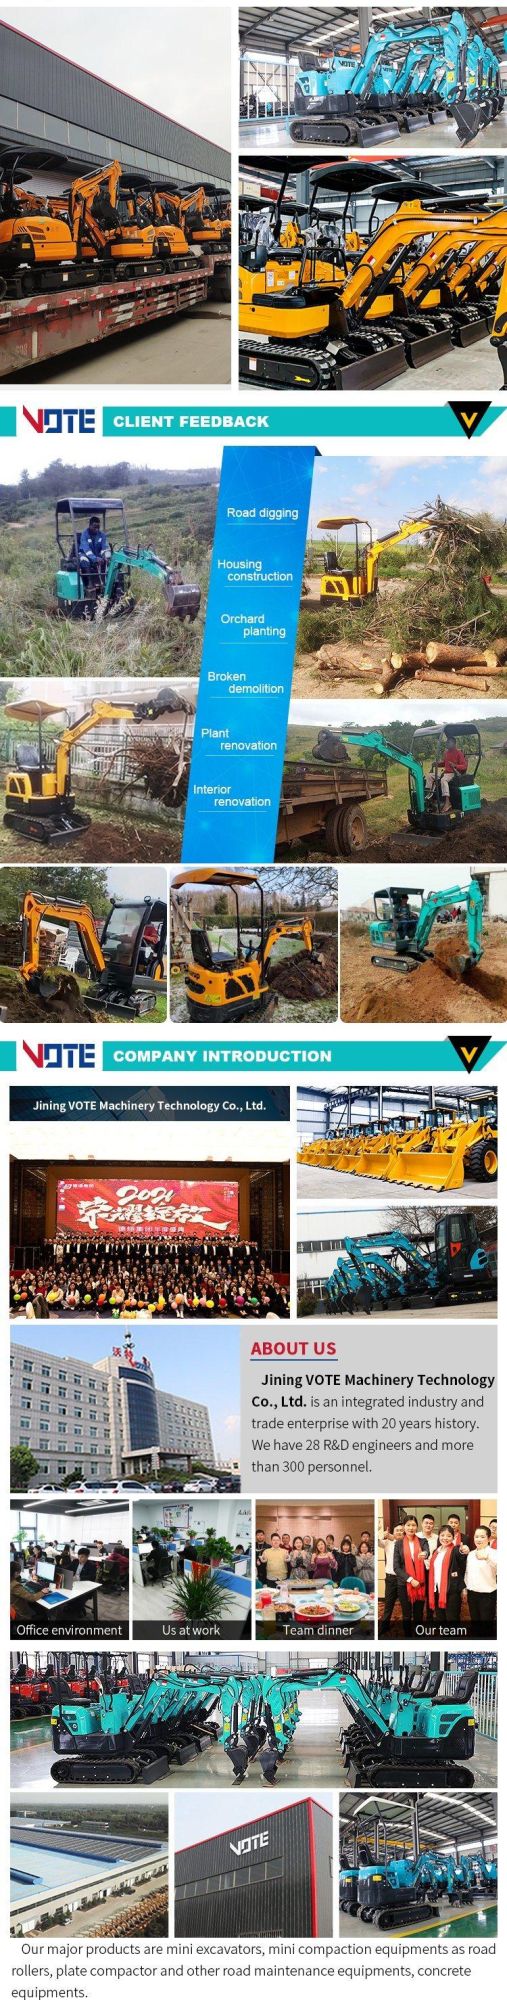 Mini Excavator Prices 1 Ton Crawler 2 Ton Excavator with Cabfor Sale on-Time Delivery